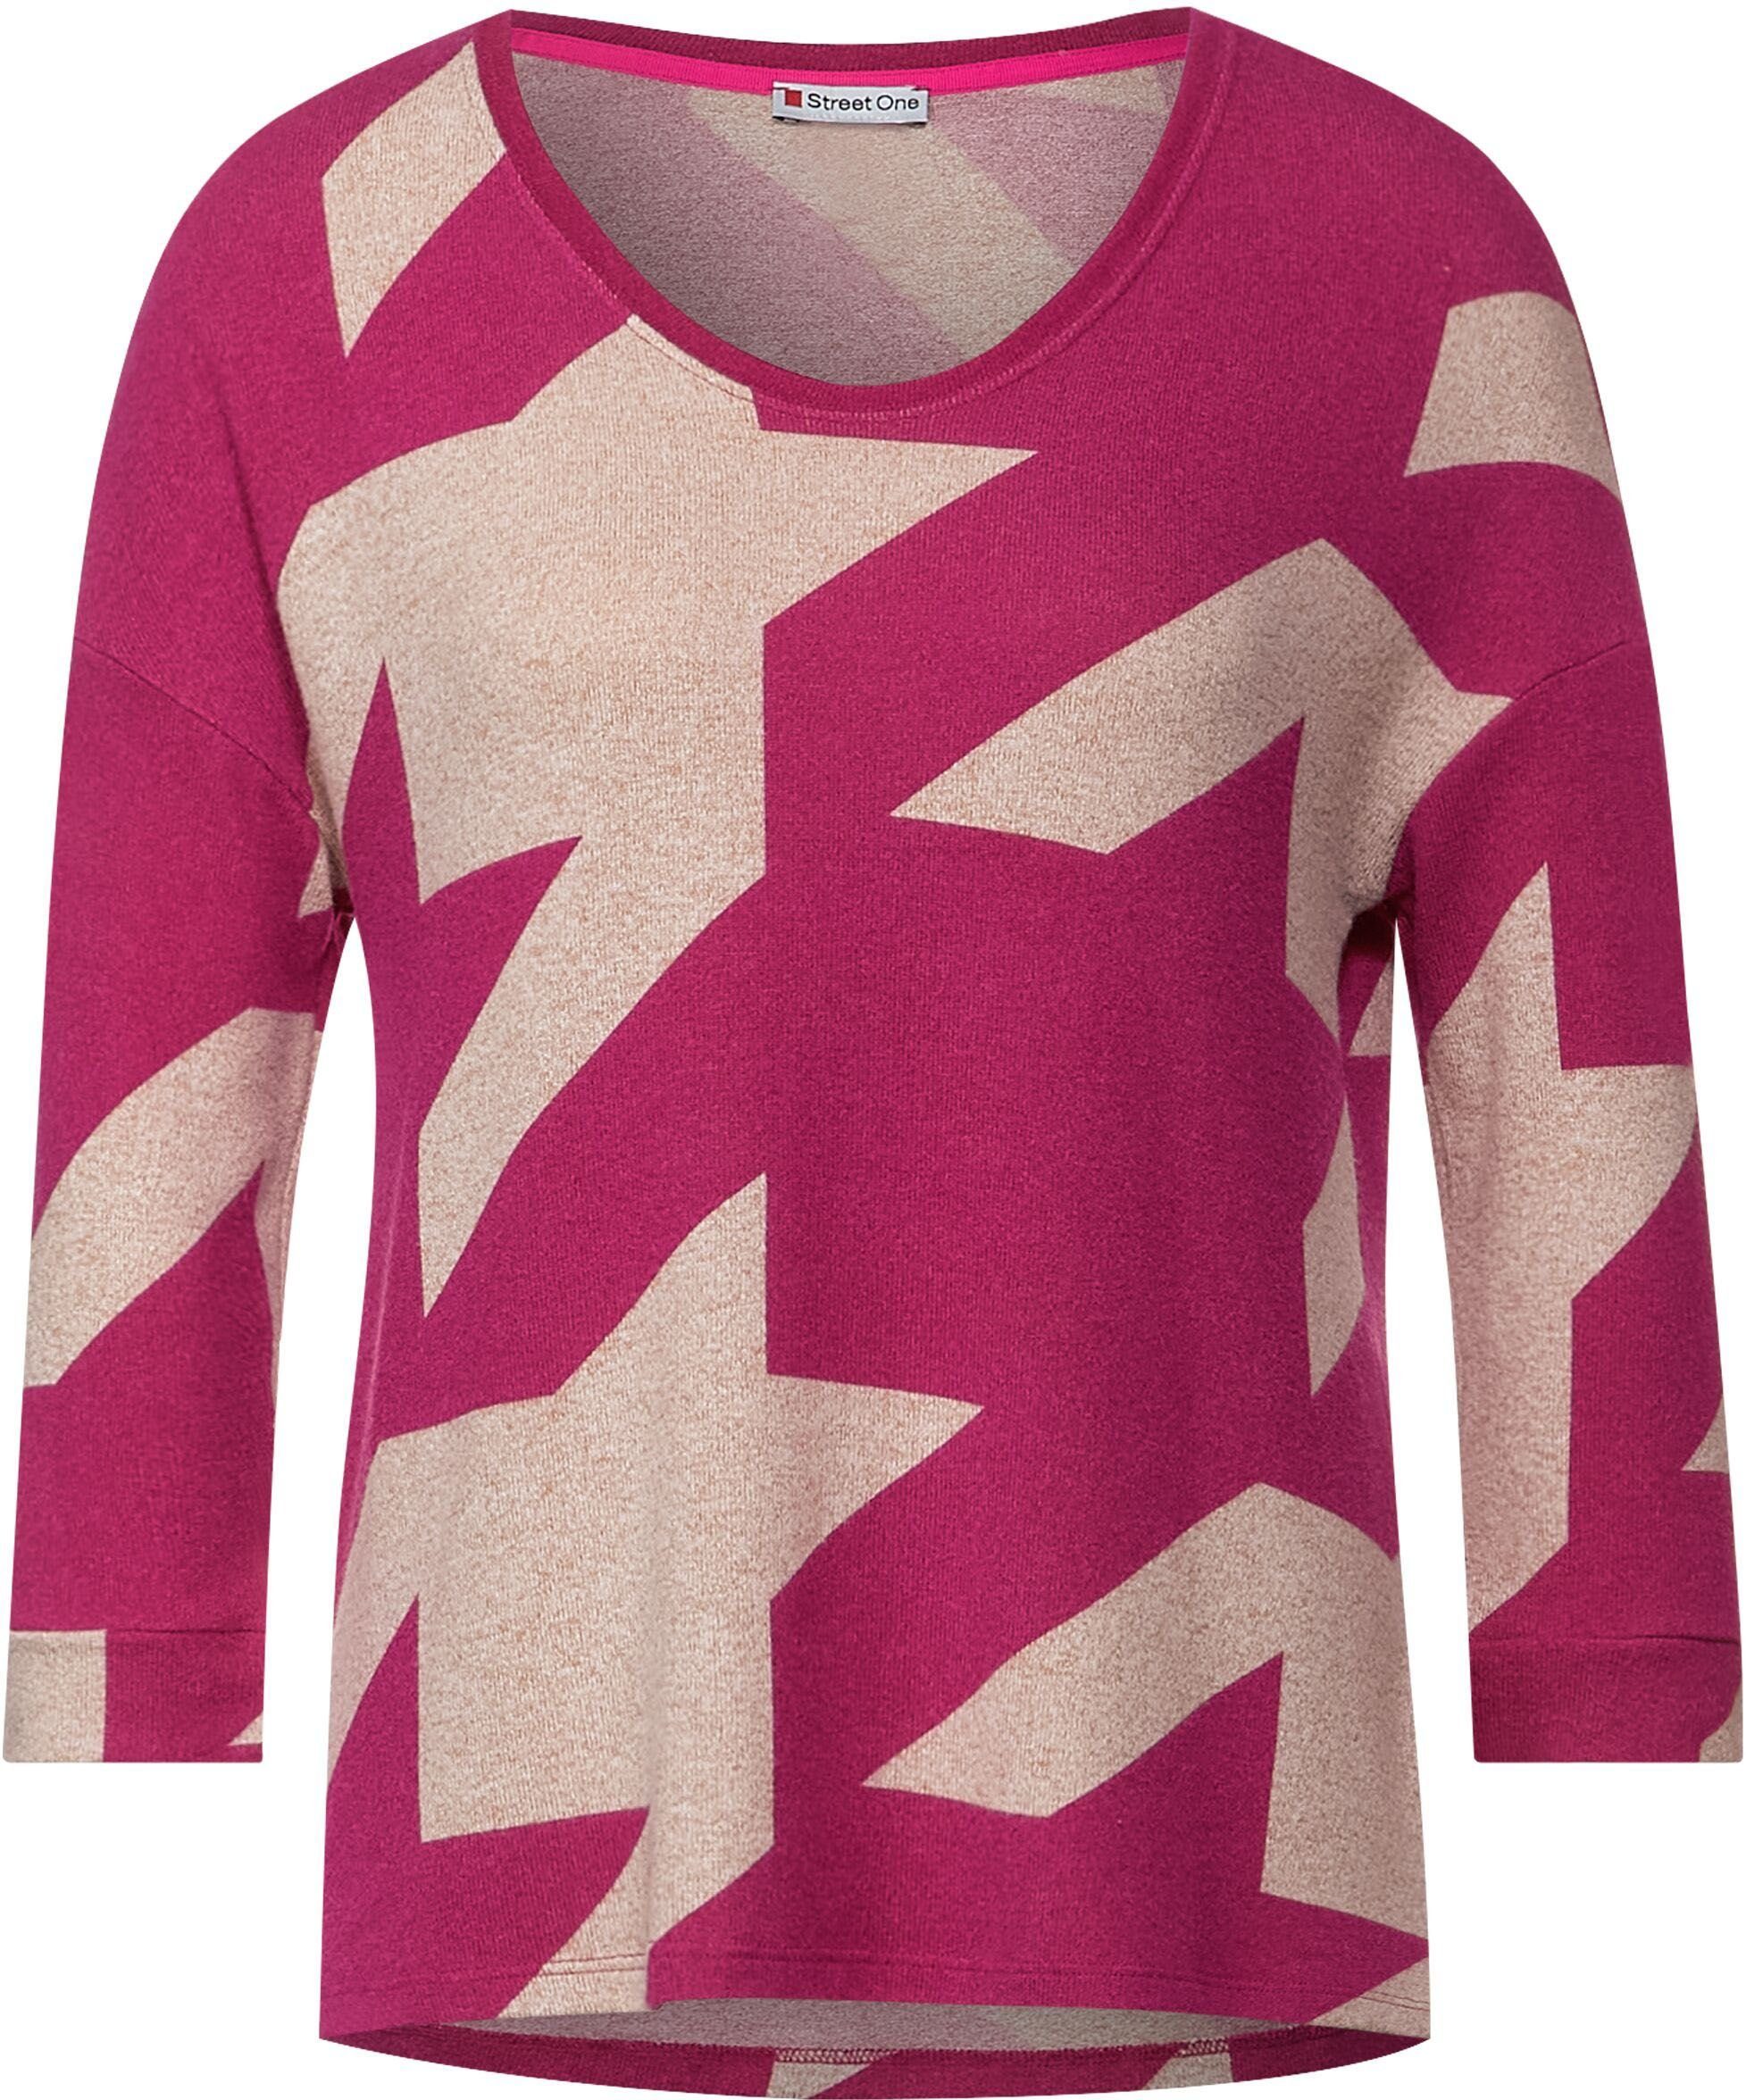 pink ONE mit STREET lavish melange 3/4-Arm-Shirt Hahnentrittmuster